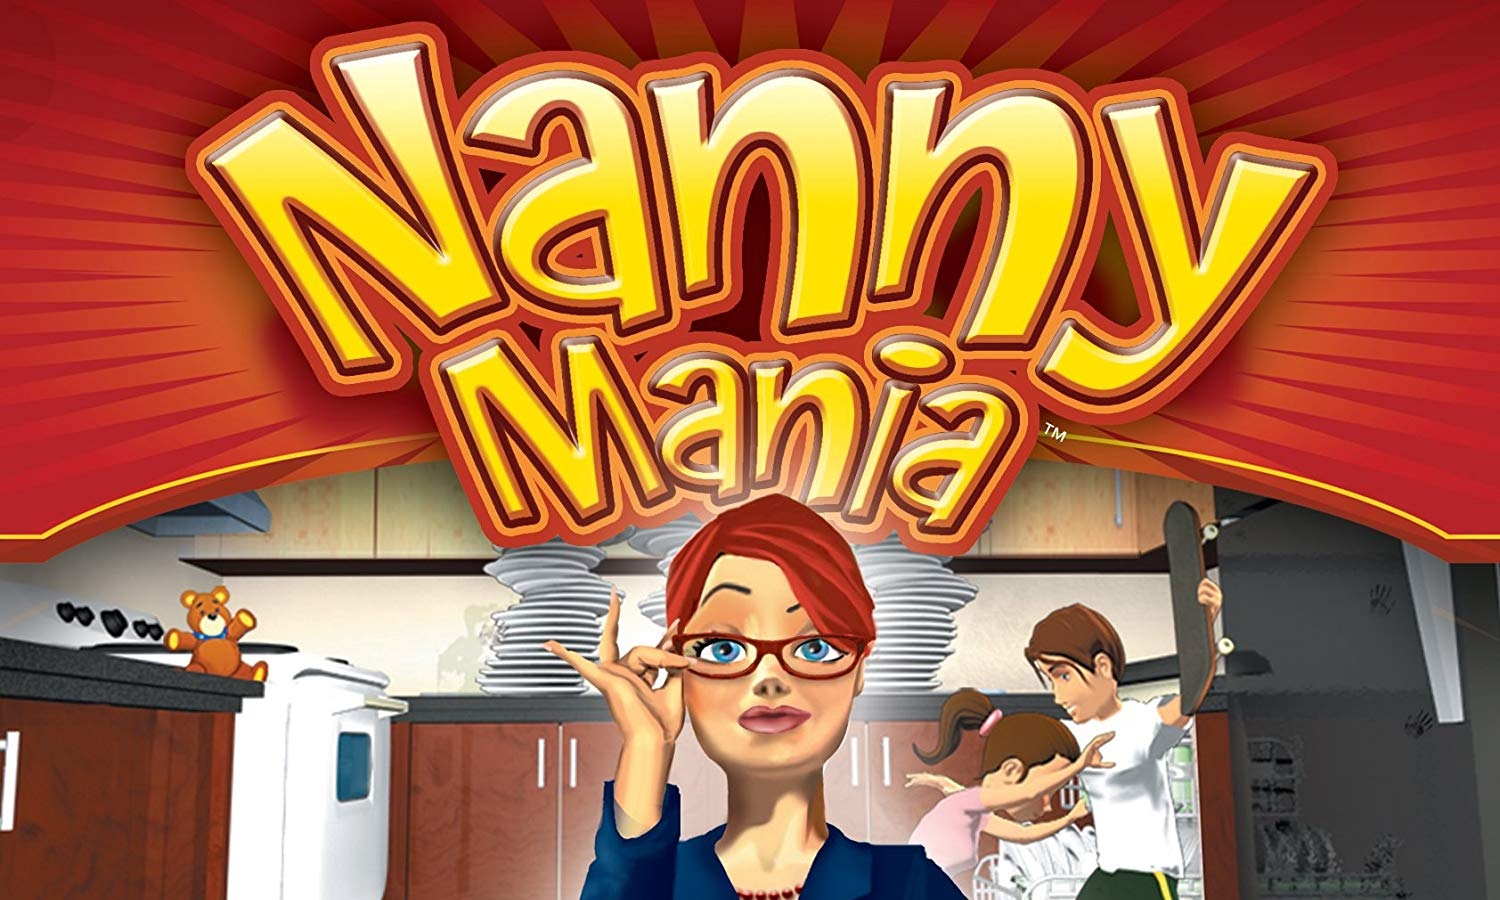 Nanny mania 2 full version crack